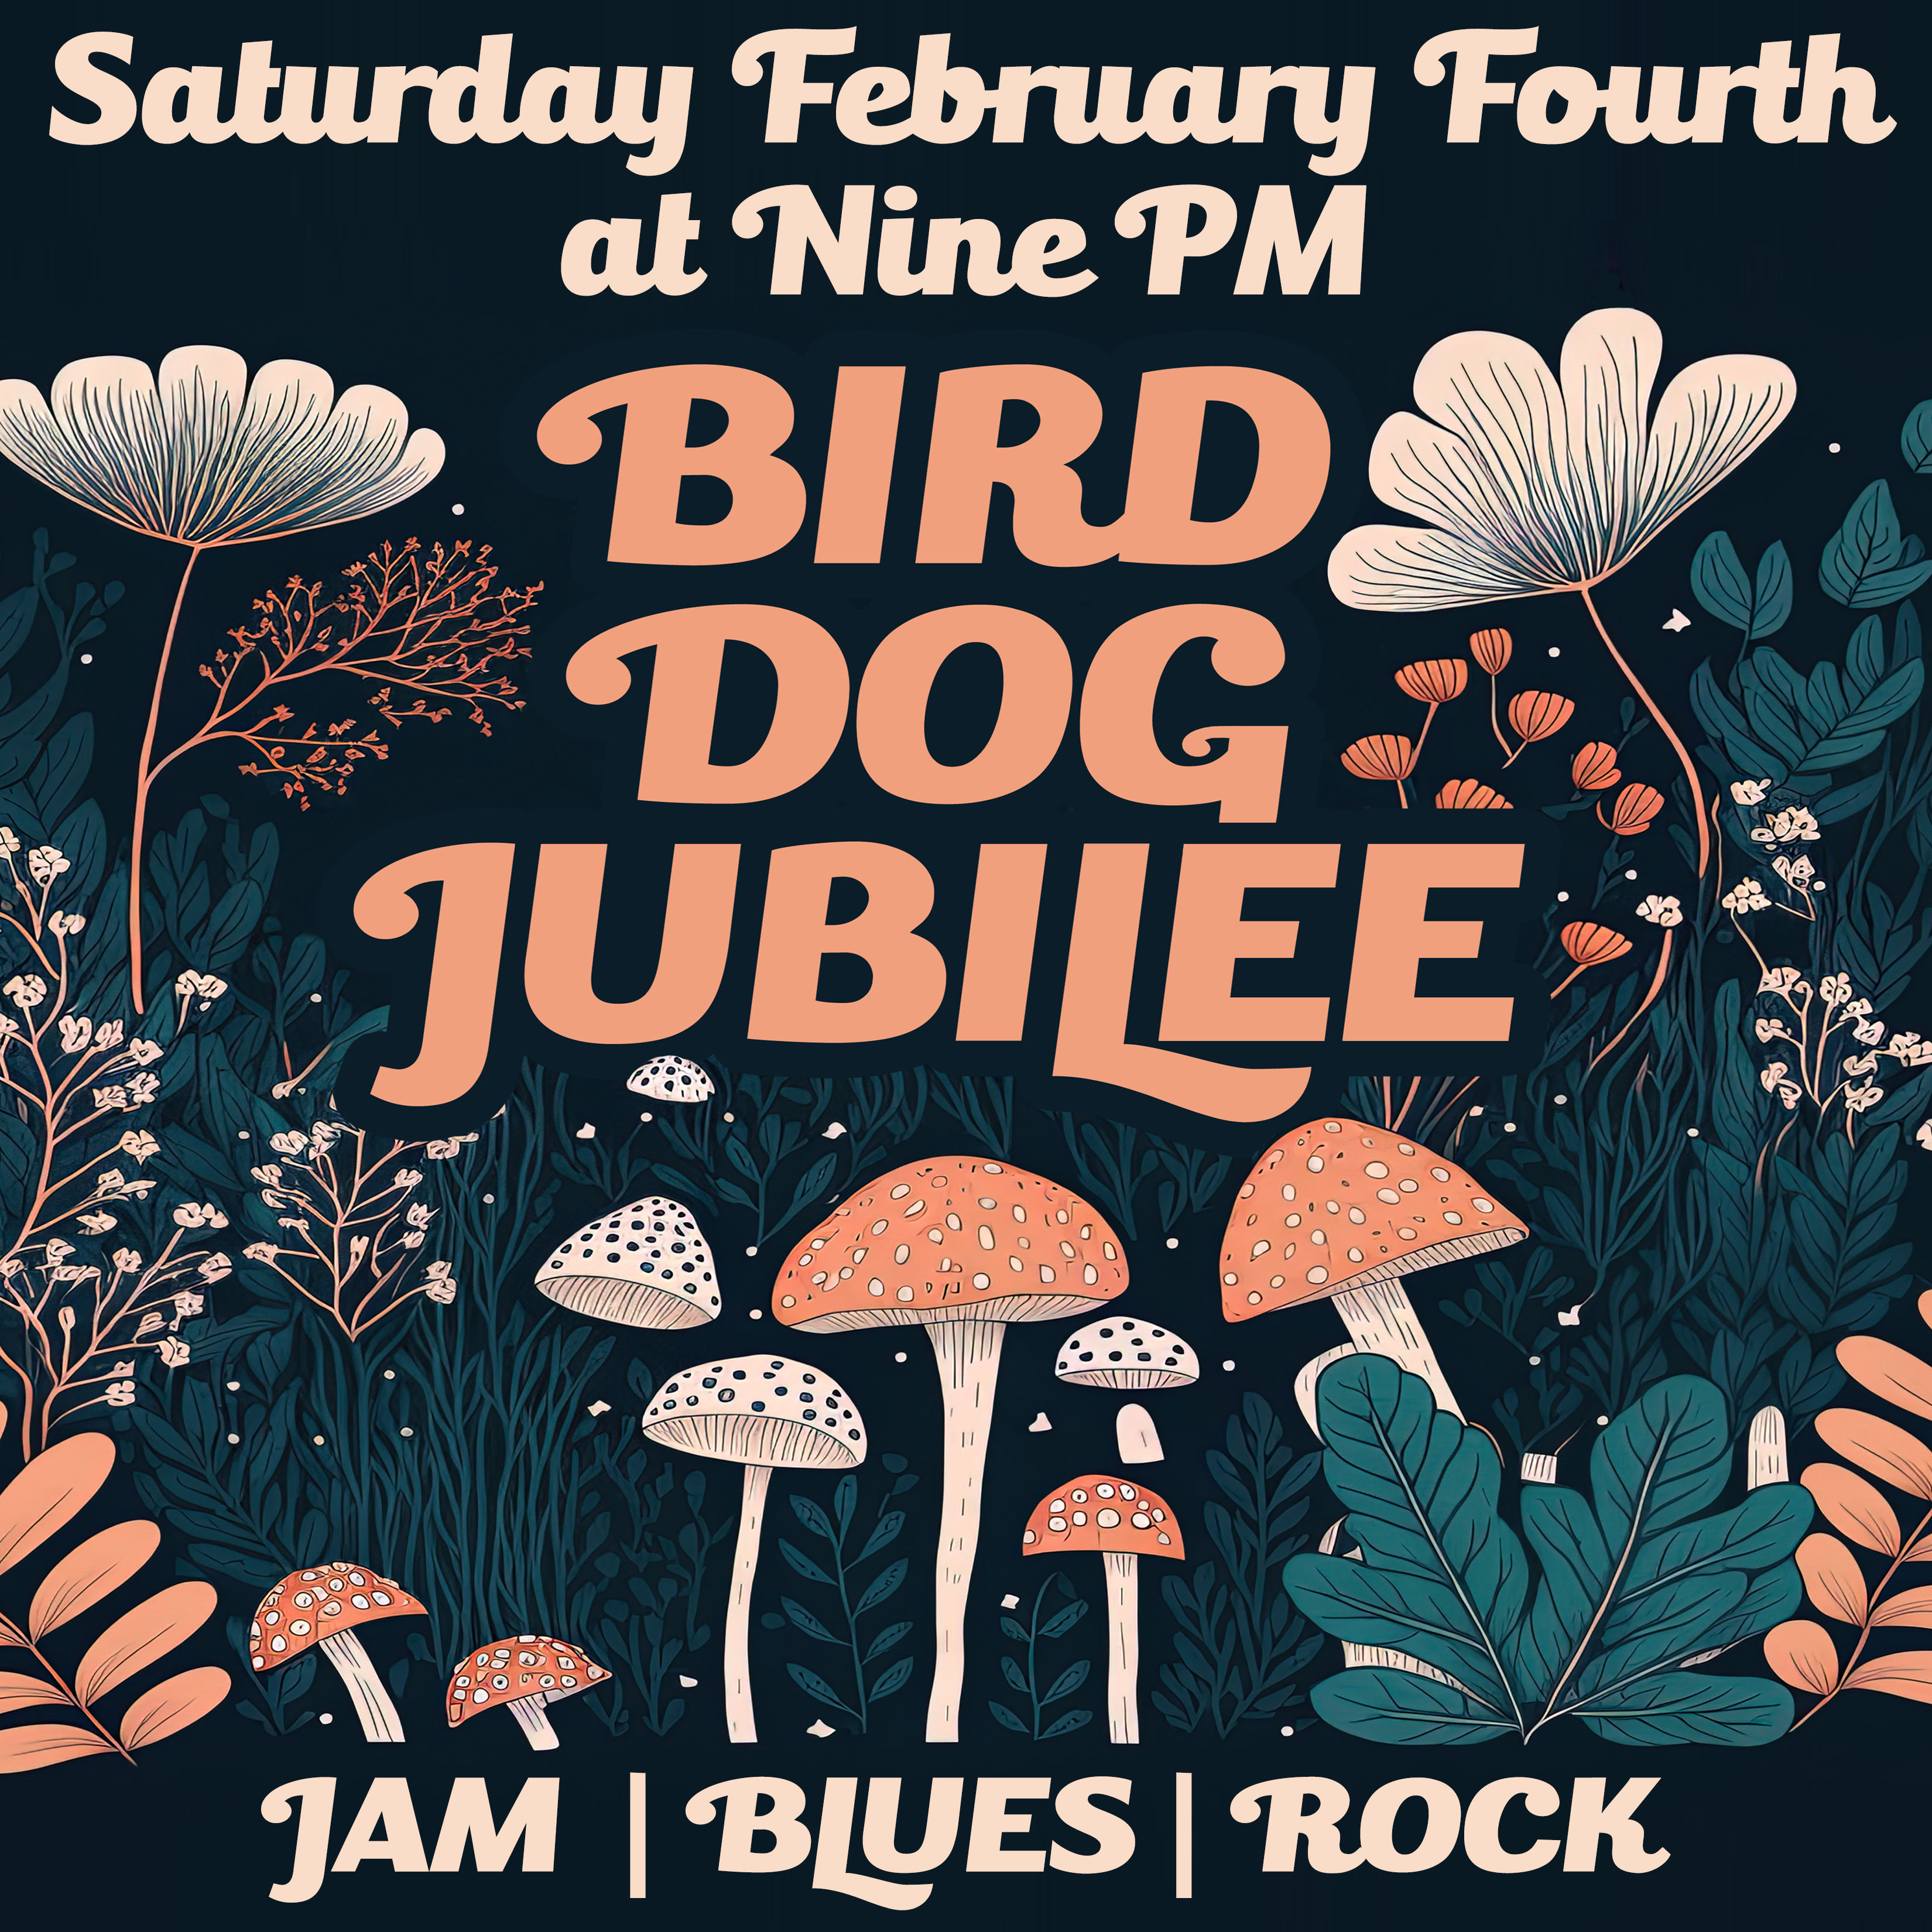 Bird Dog Jubilee